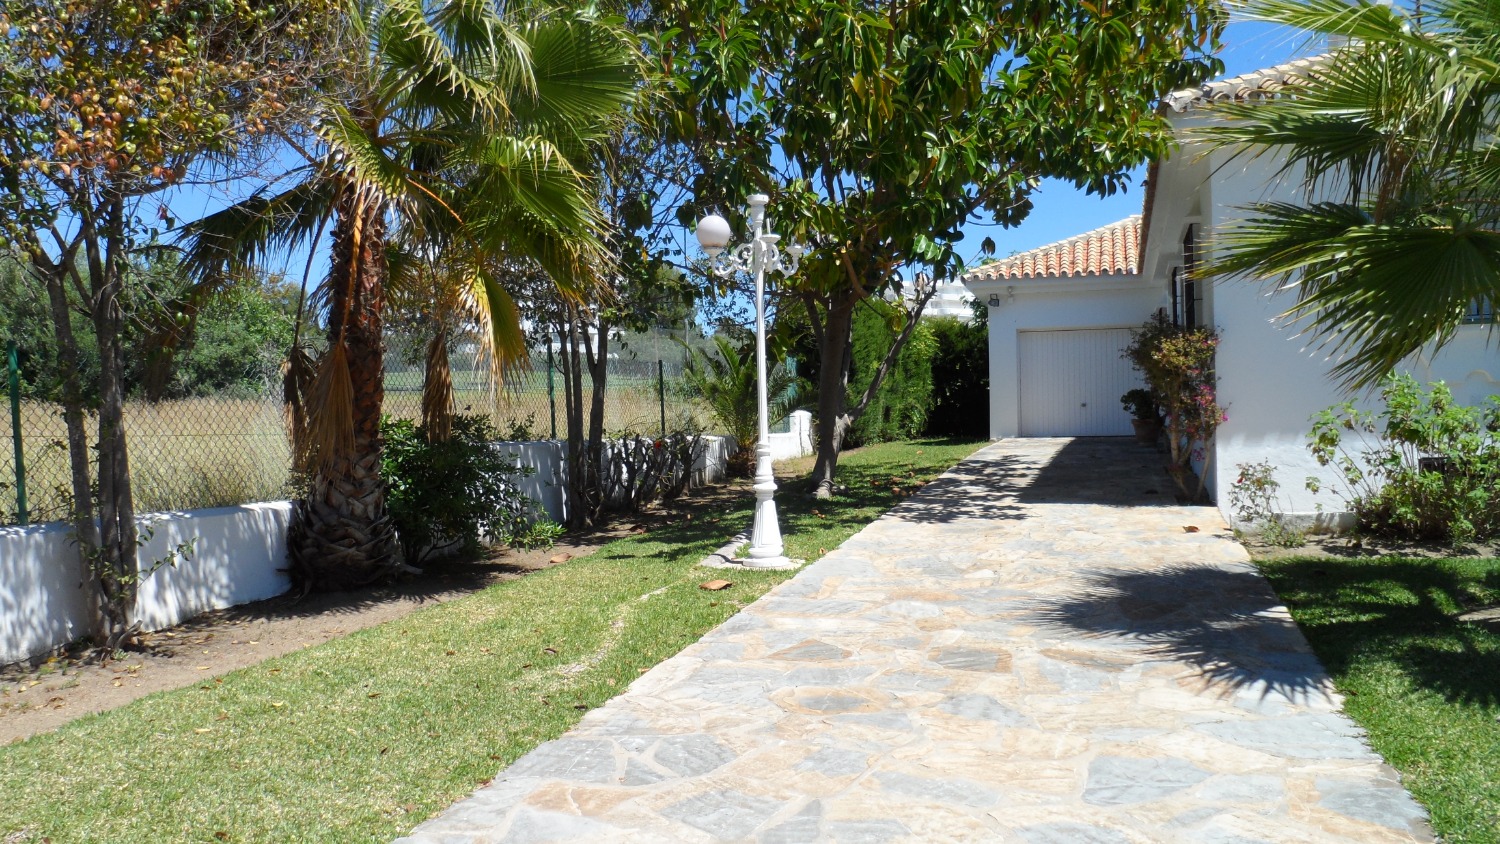 Villa indipendente vicino a campi da golf, Guadalmina